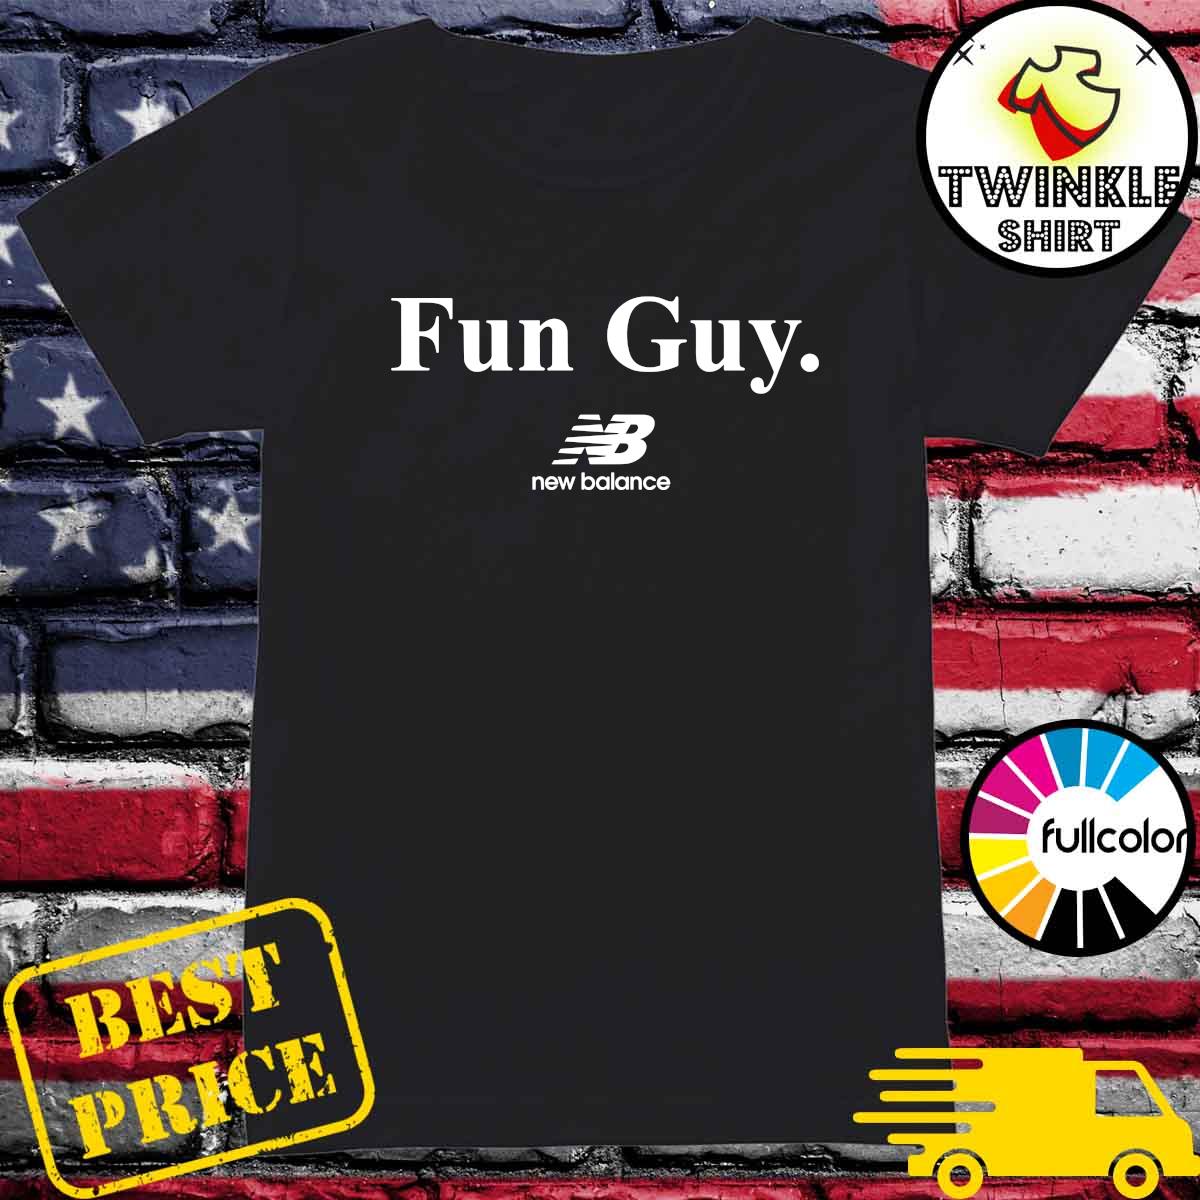 buy new balance fun guy shirt